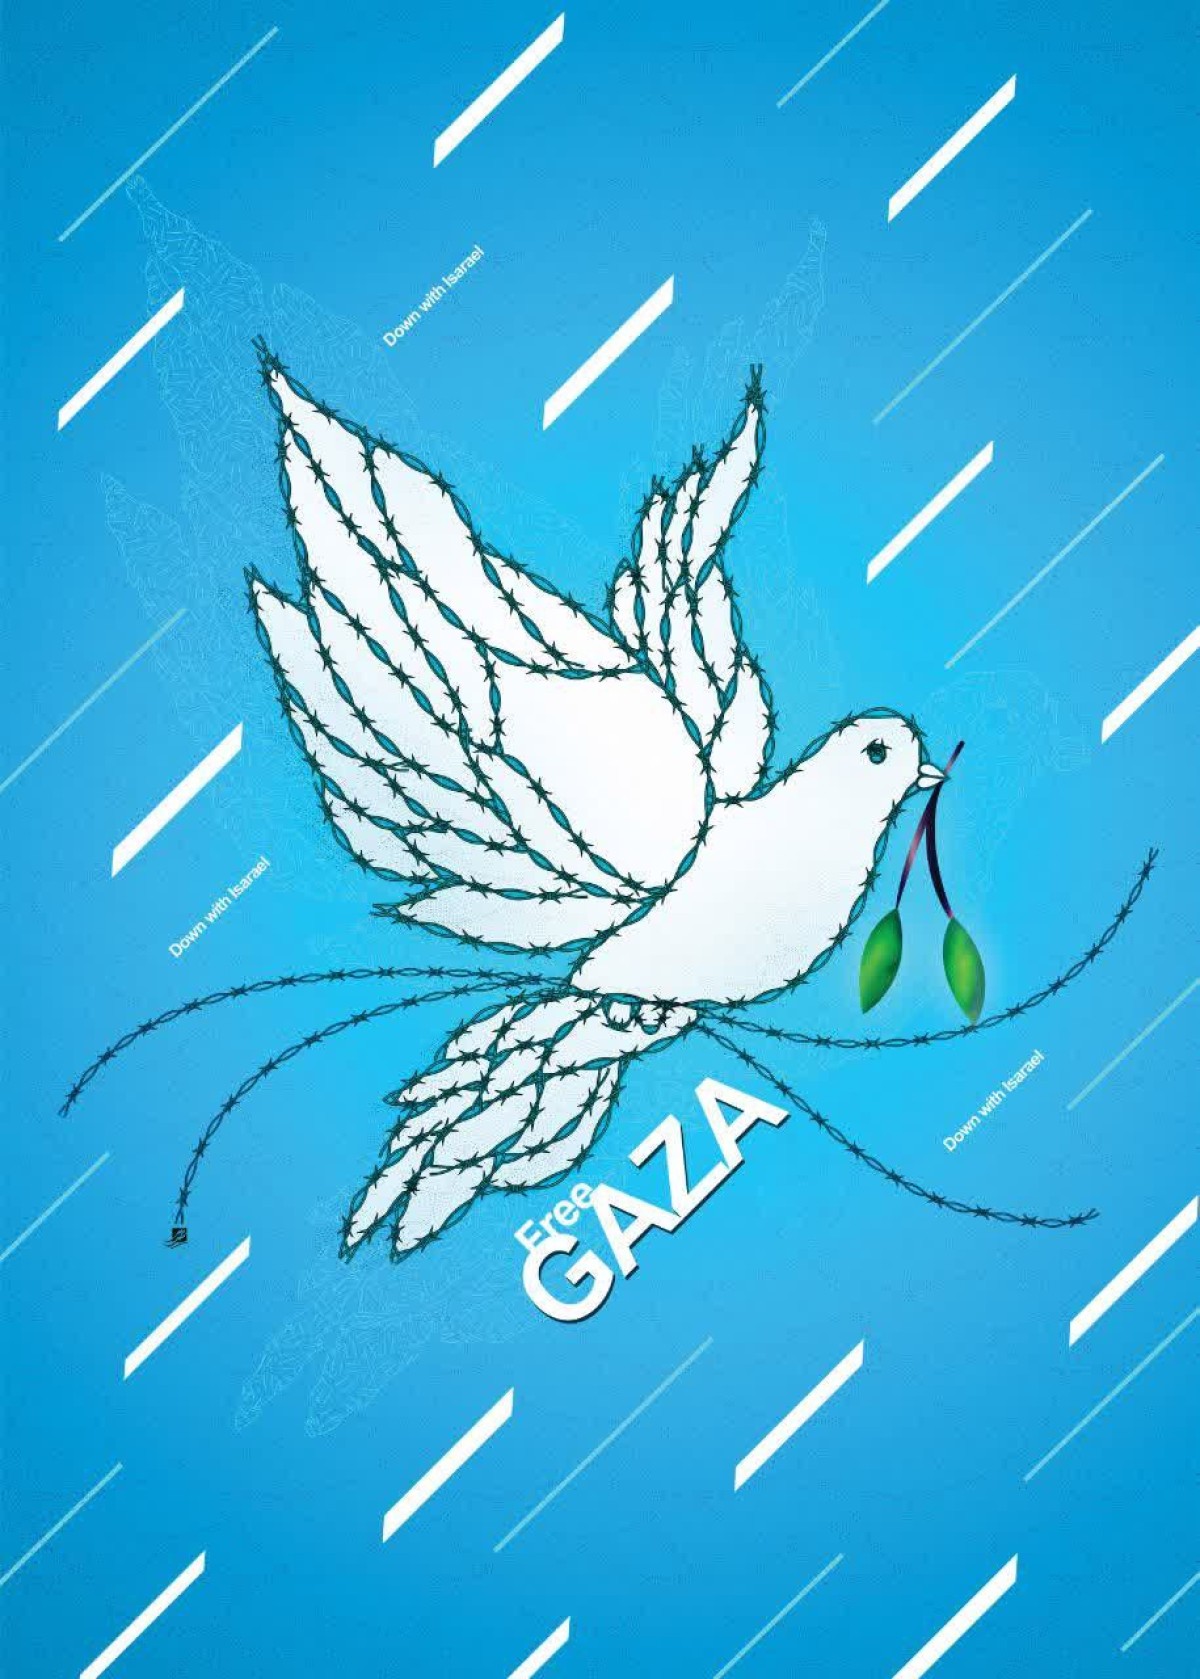 FREE GAZA 1